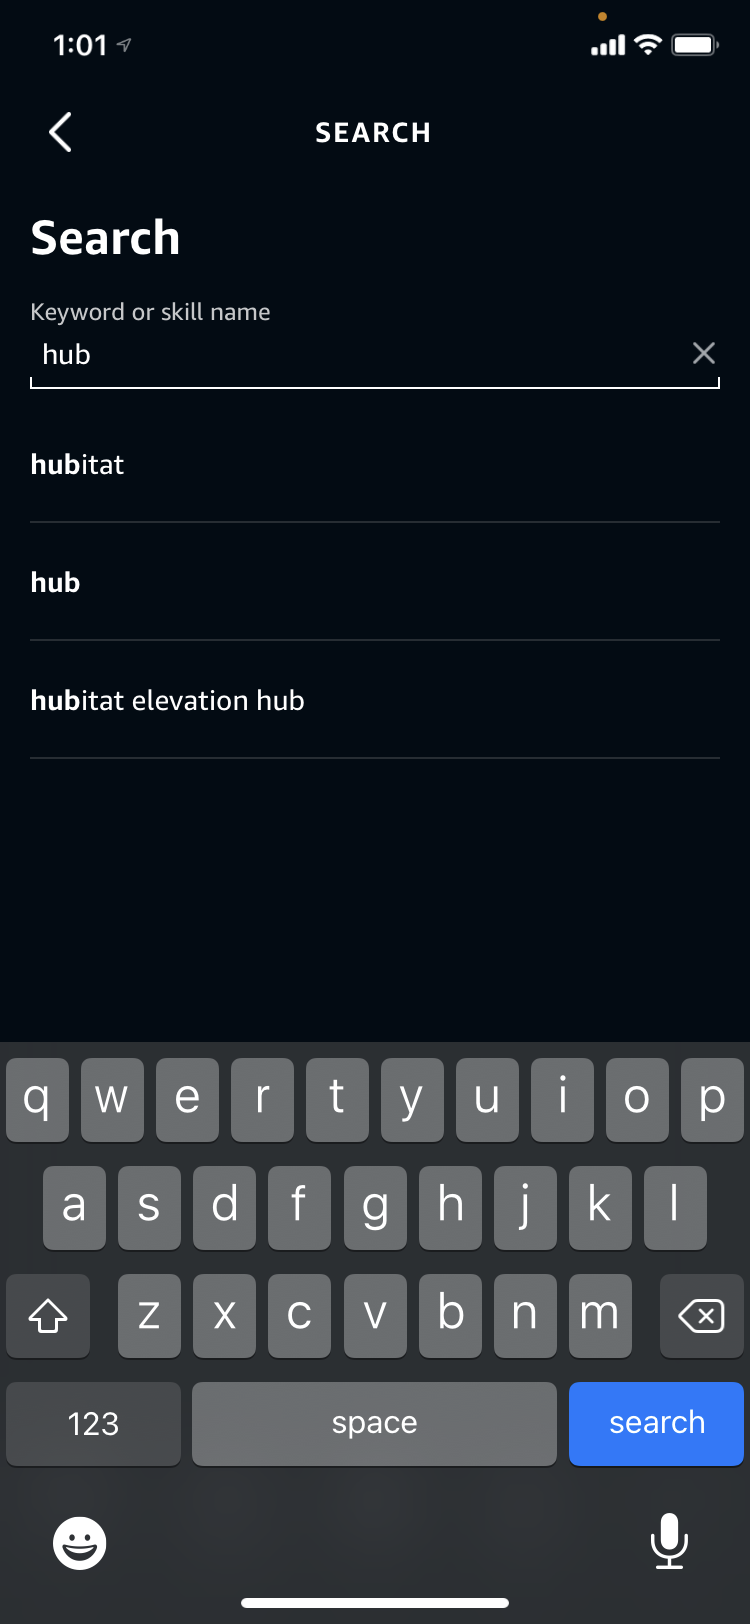 Screenshot: searching for "Hubitat"